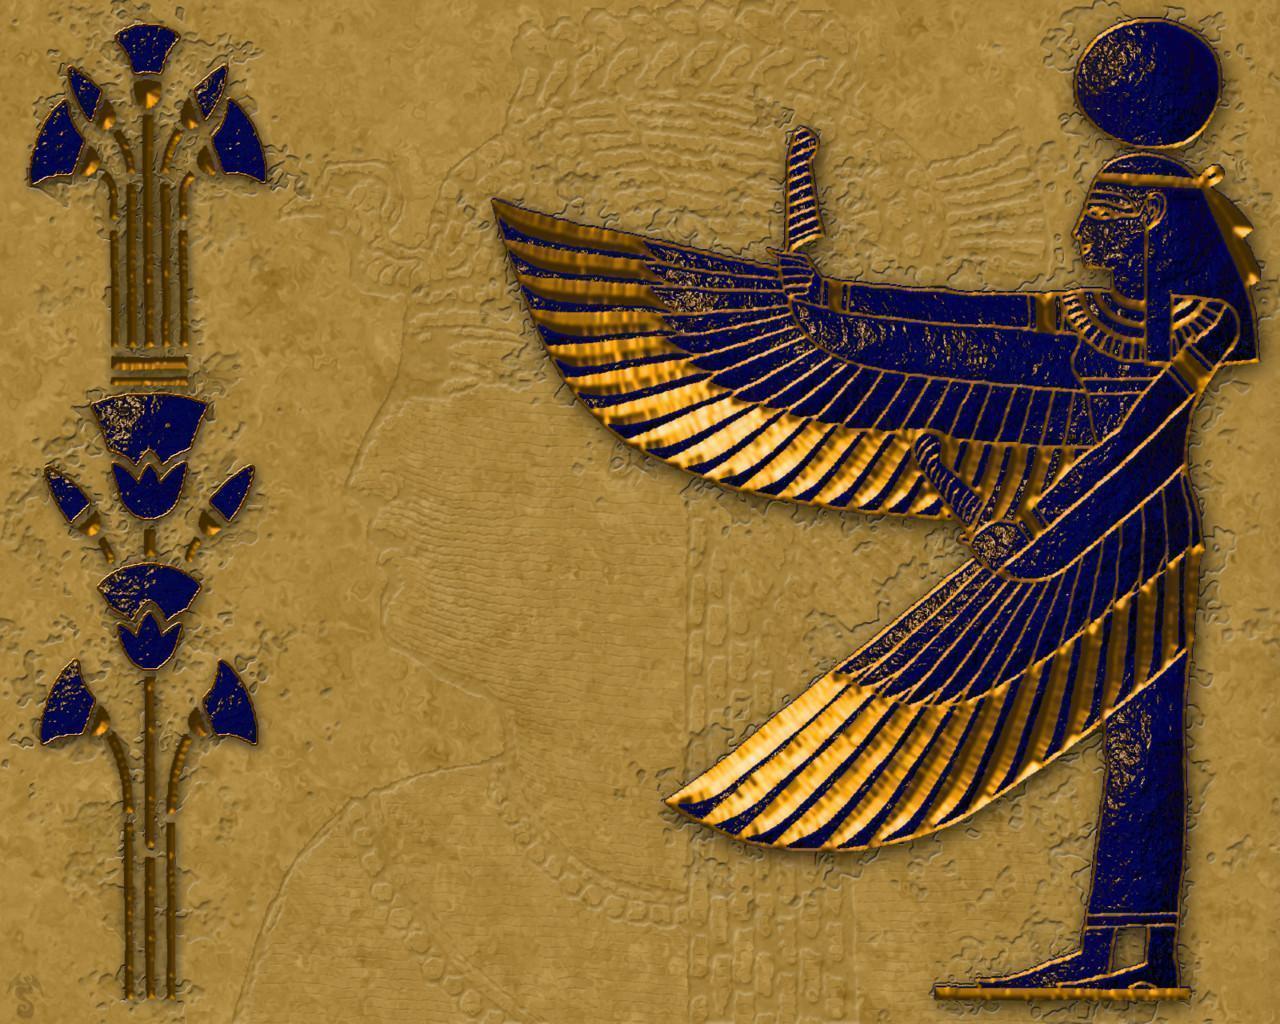 Egyptian, Desktop and mobile wallpaper